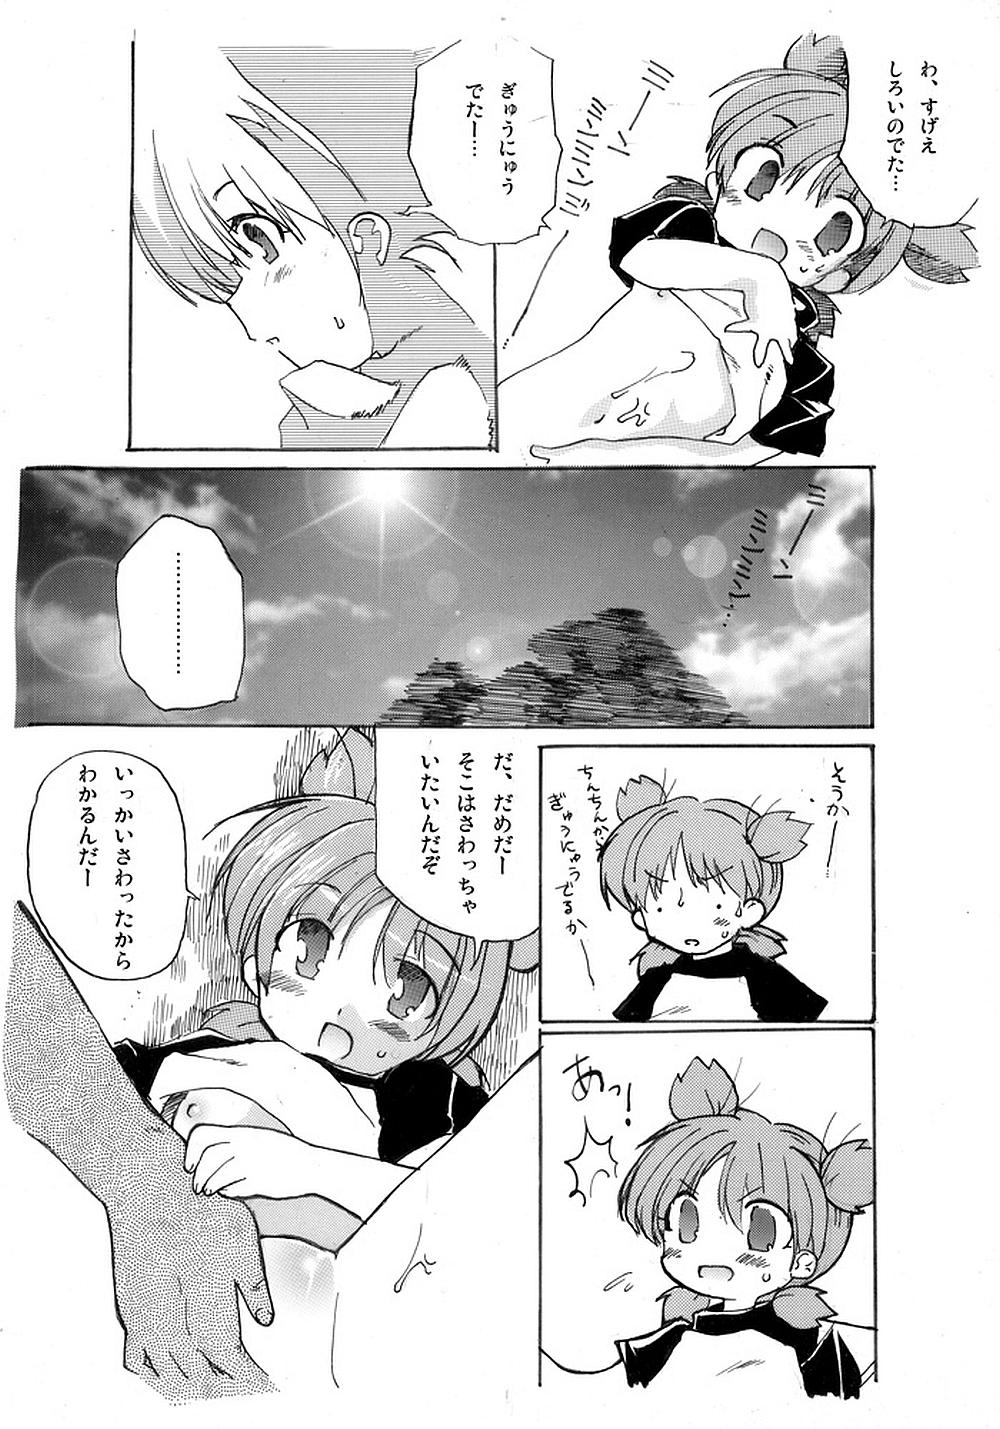 Furry Yotuba to Asobo! - Yotsubato Flogging - Page 5